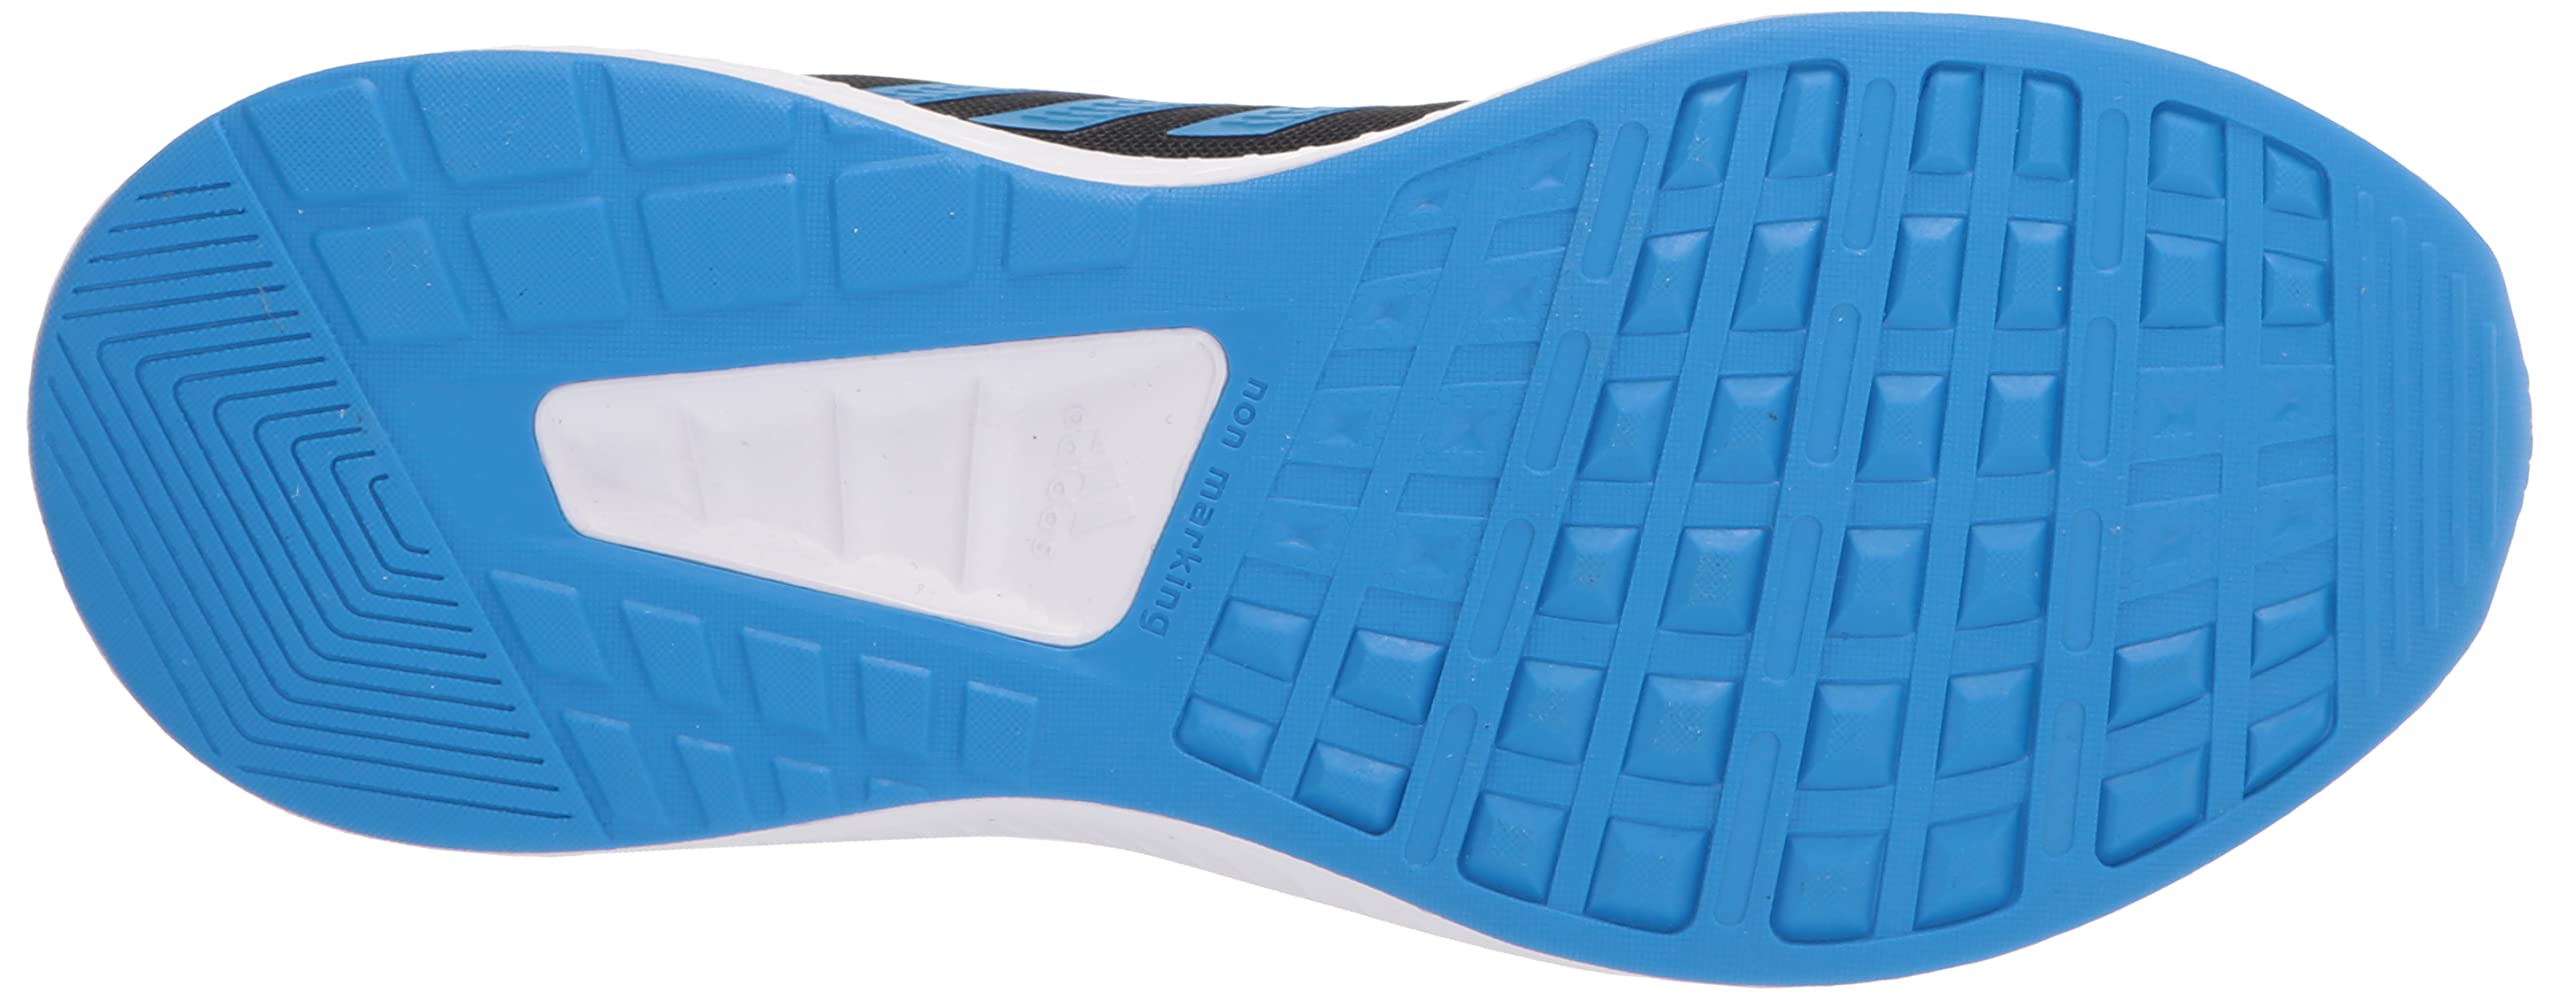 adidas Unisex-Child Runfalcon 2.0 Running Shoe